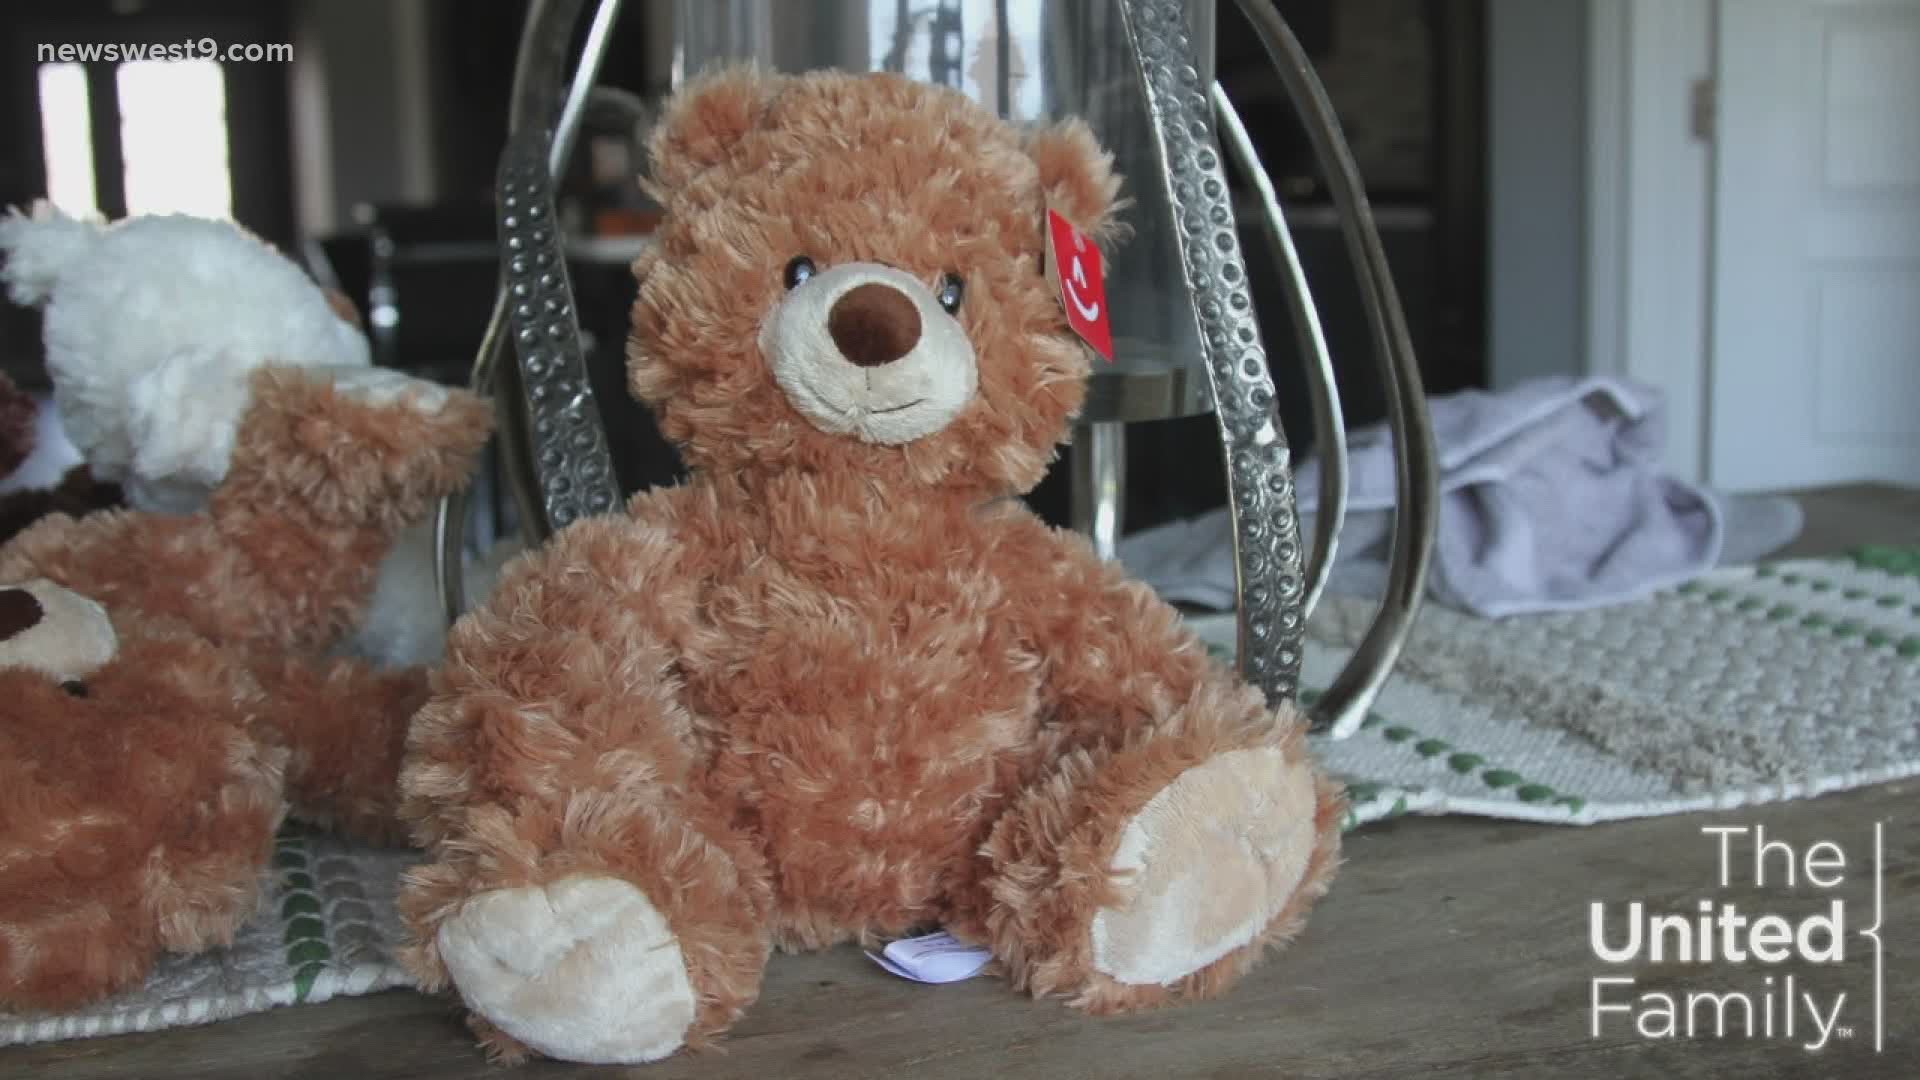 September 9 is National Teddy Bear Day.